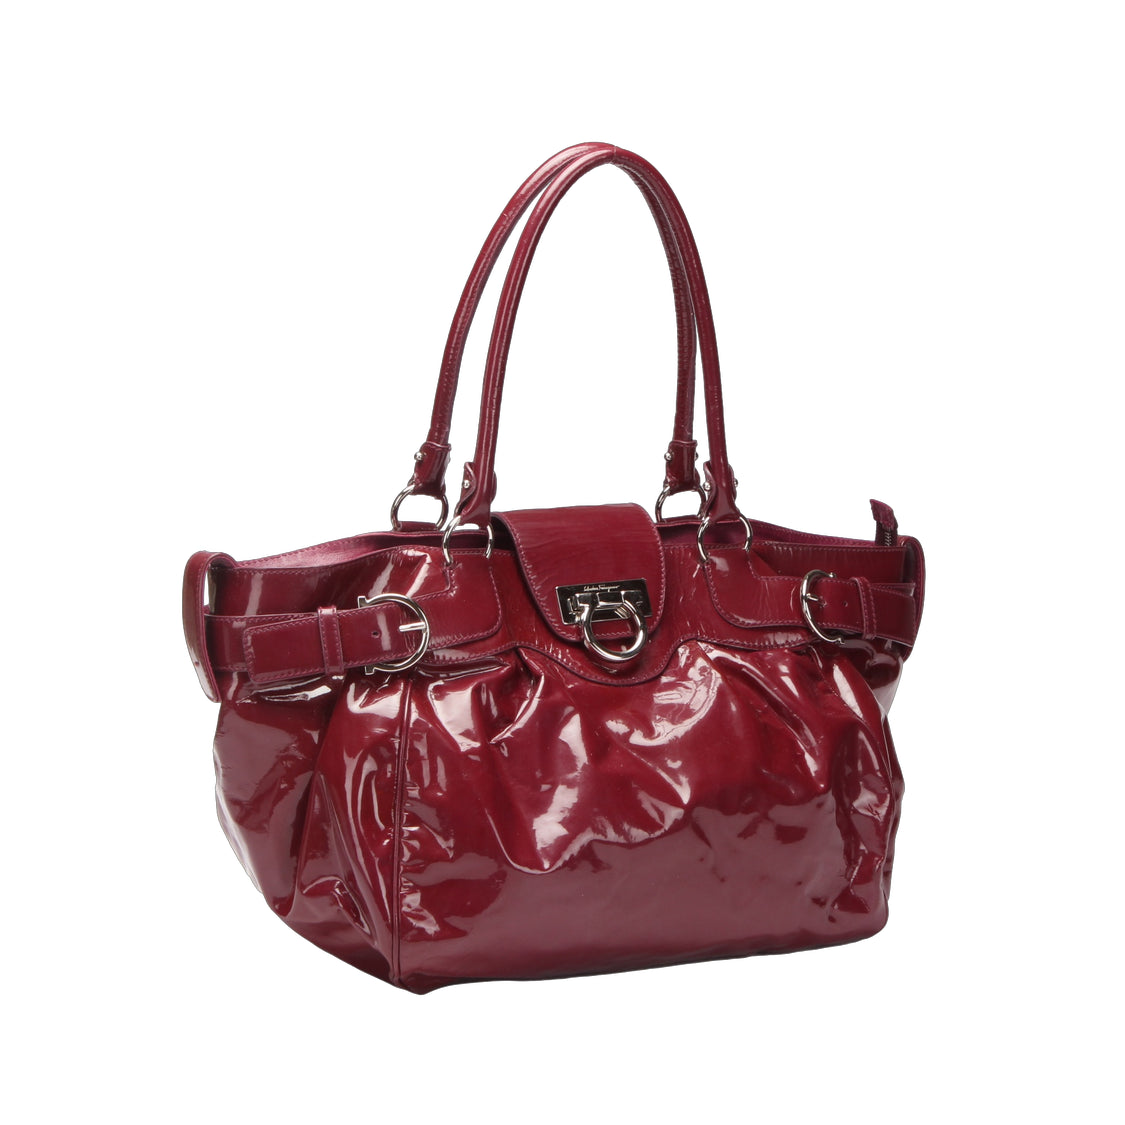 Gancini Marisa Patent Leather Shoulder Bag AB-21 A049